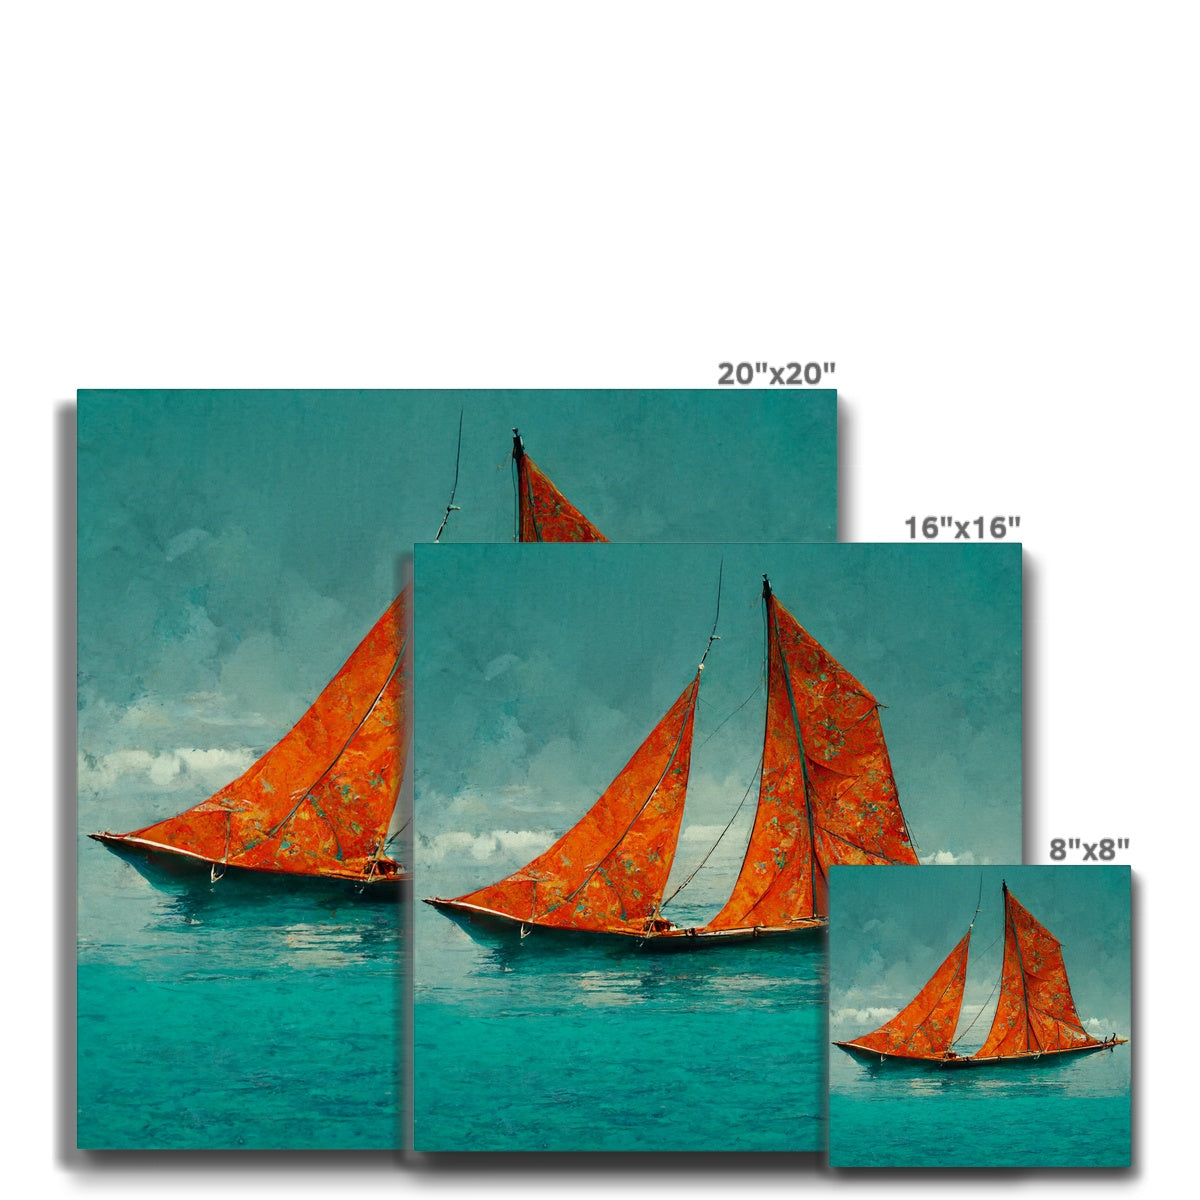 Sail Free Eco Canvas